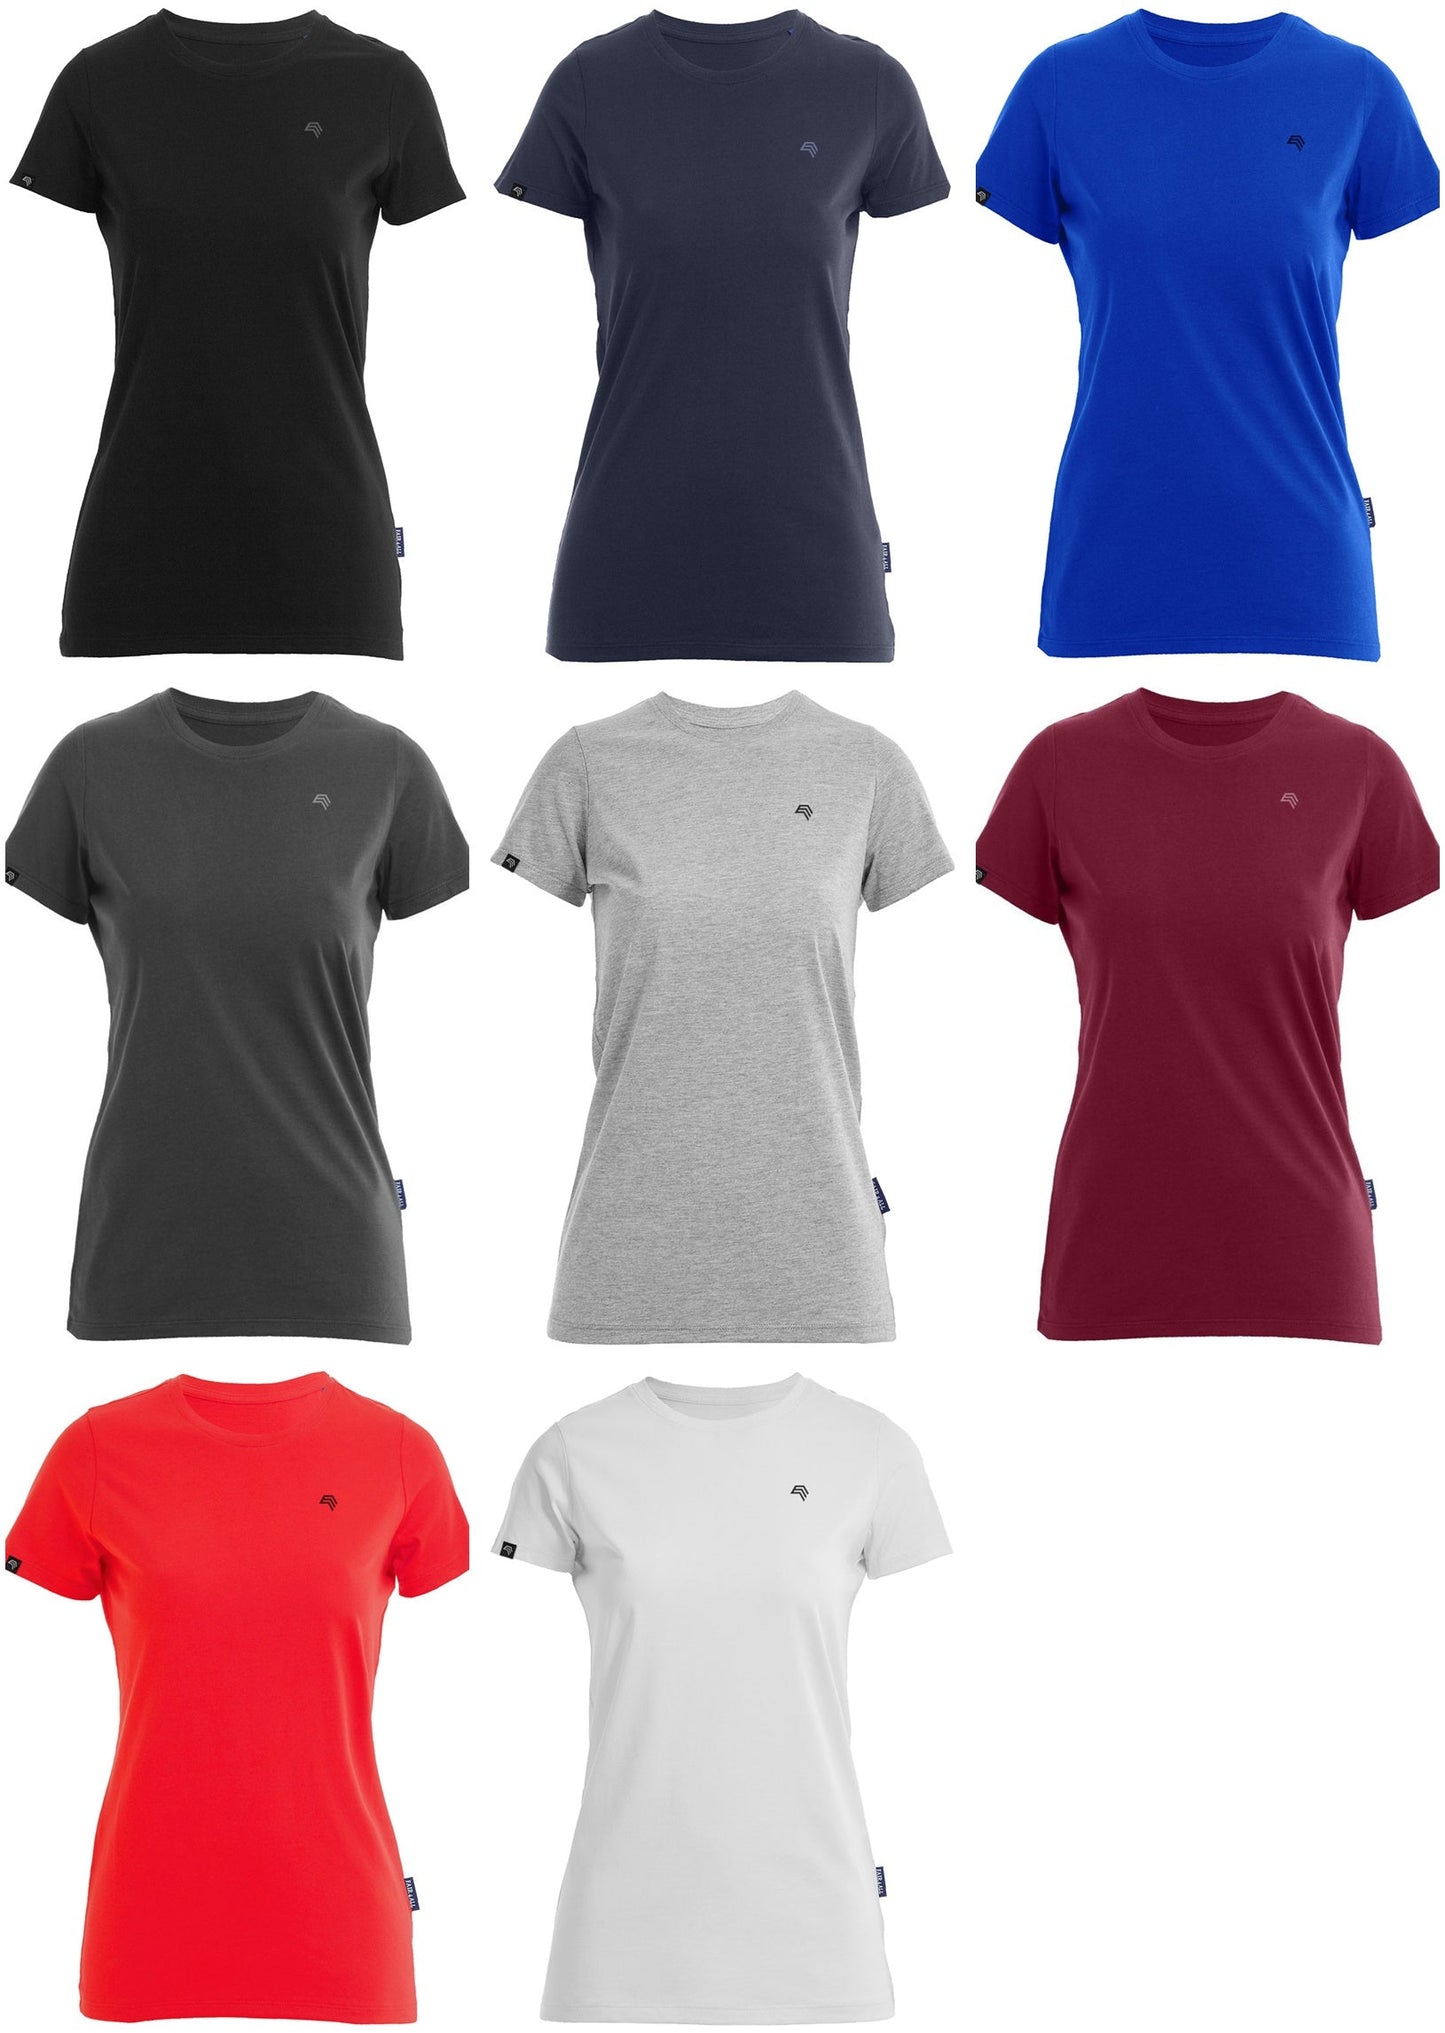 RMH 0201 ― Damen Luxury Bio-Baumwolle T-Shirt - Navy Blau